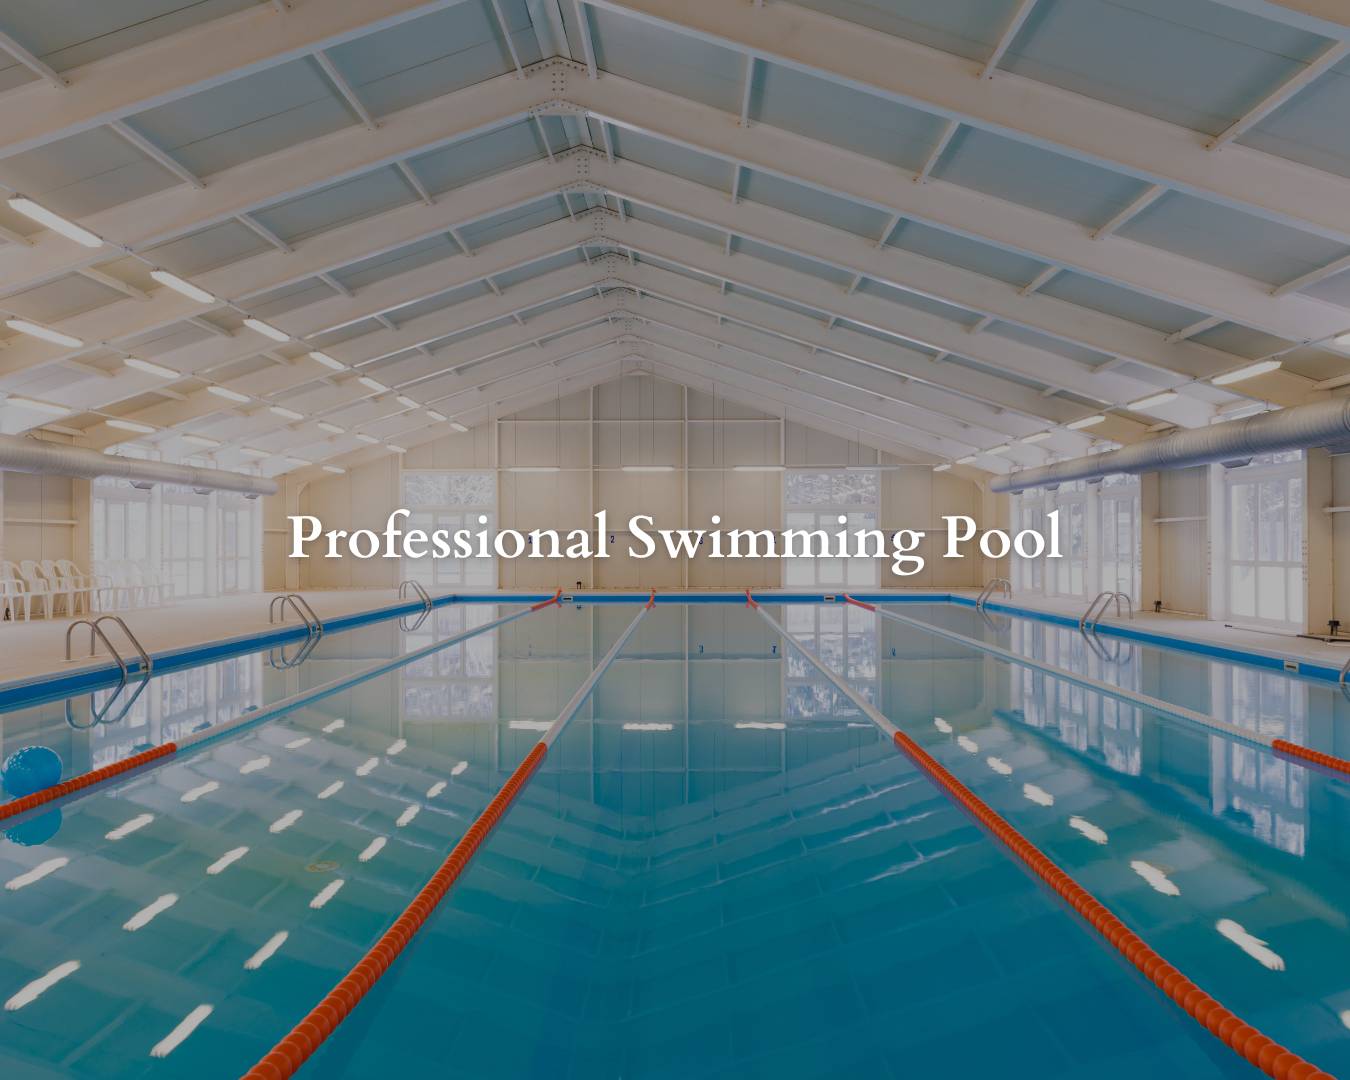 Professional Swimming Pool